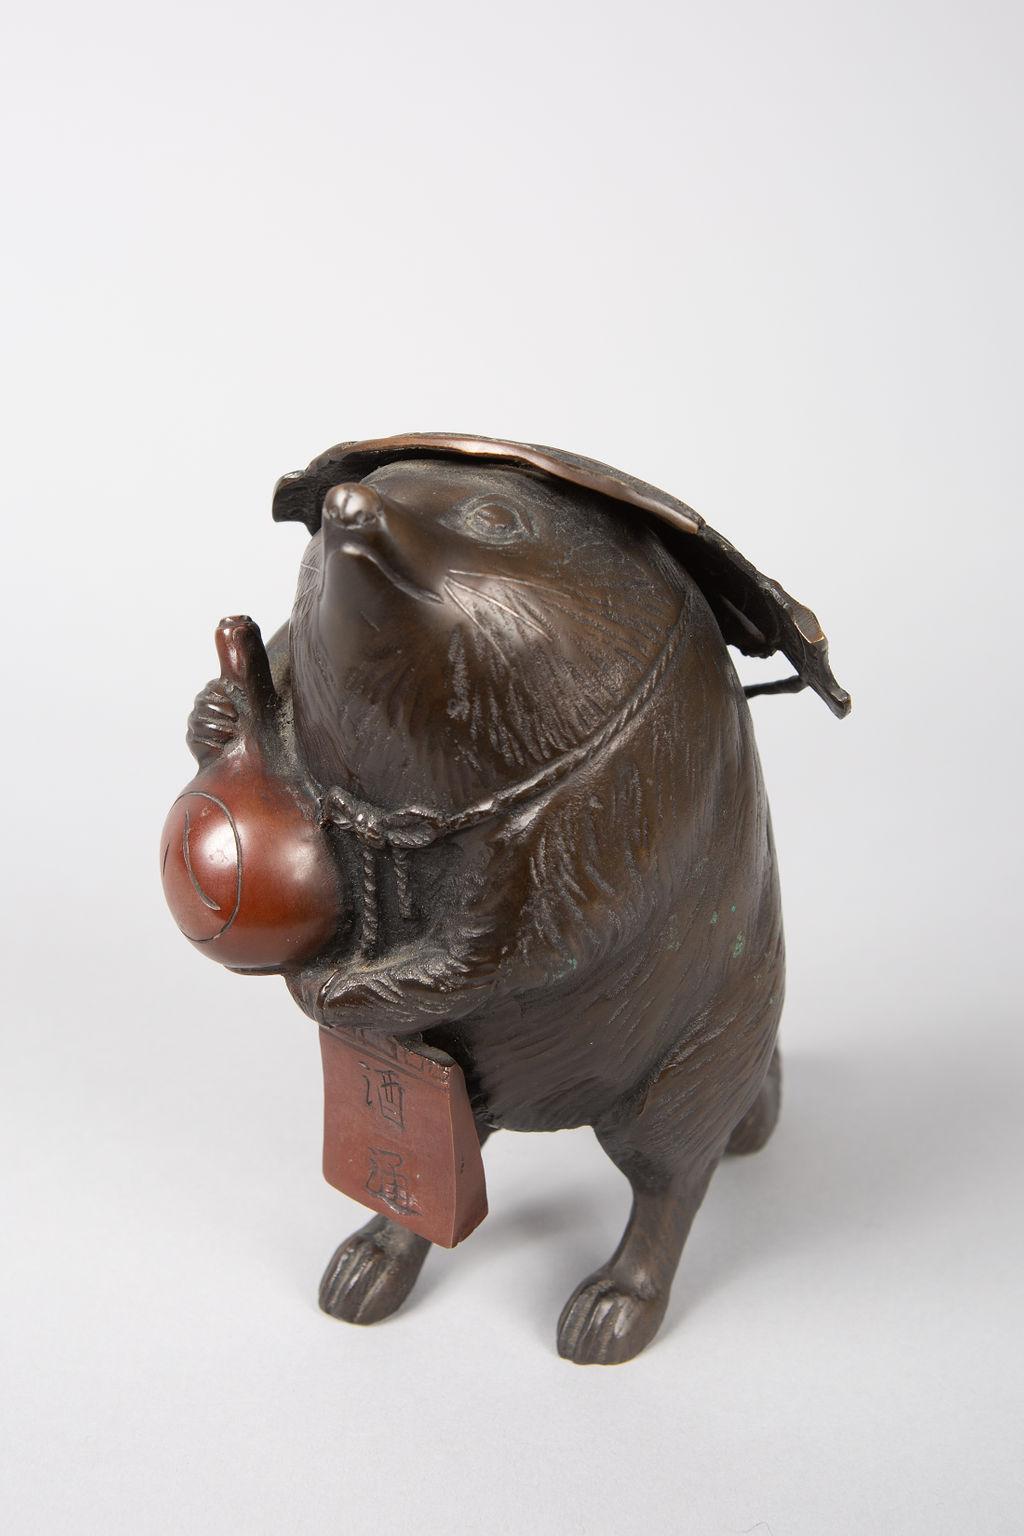 Japanese bronze sculpture of a badger, holding a sake bottle and a ledger. Great detail. Signature reads: Chikusen.